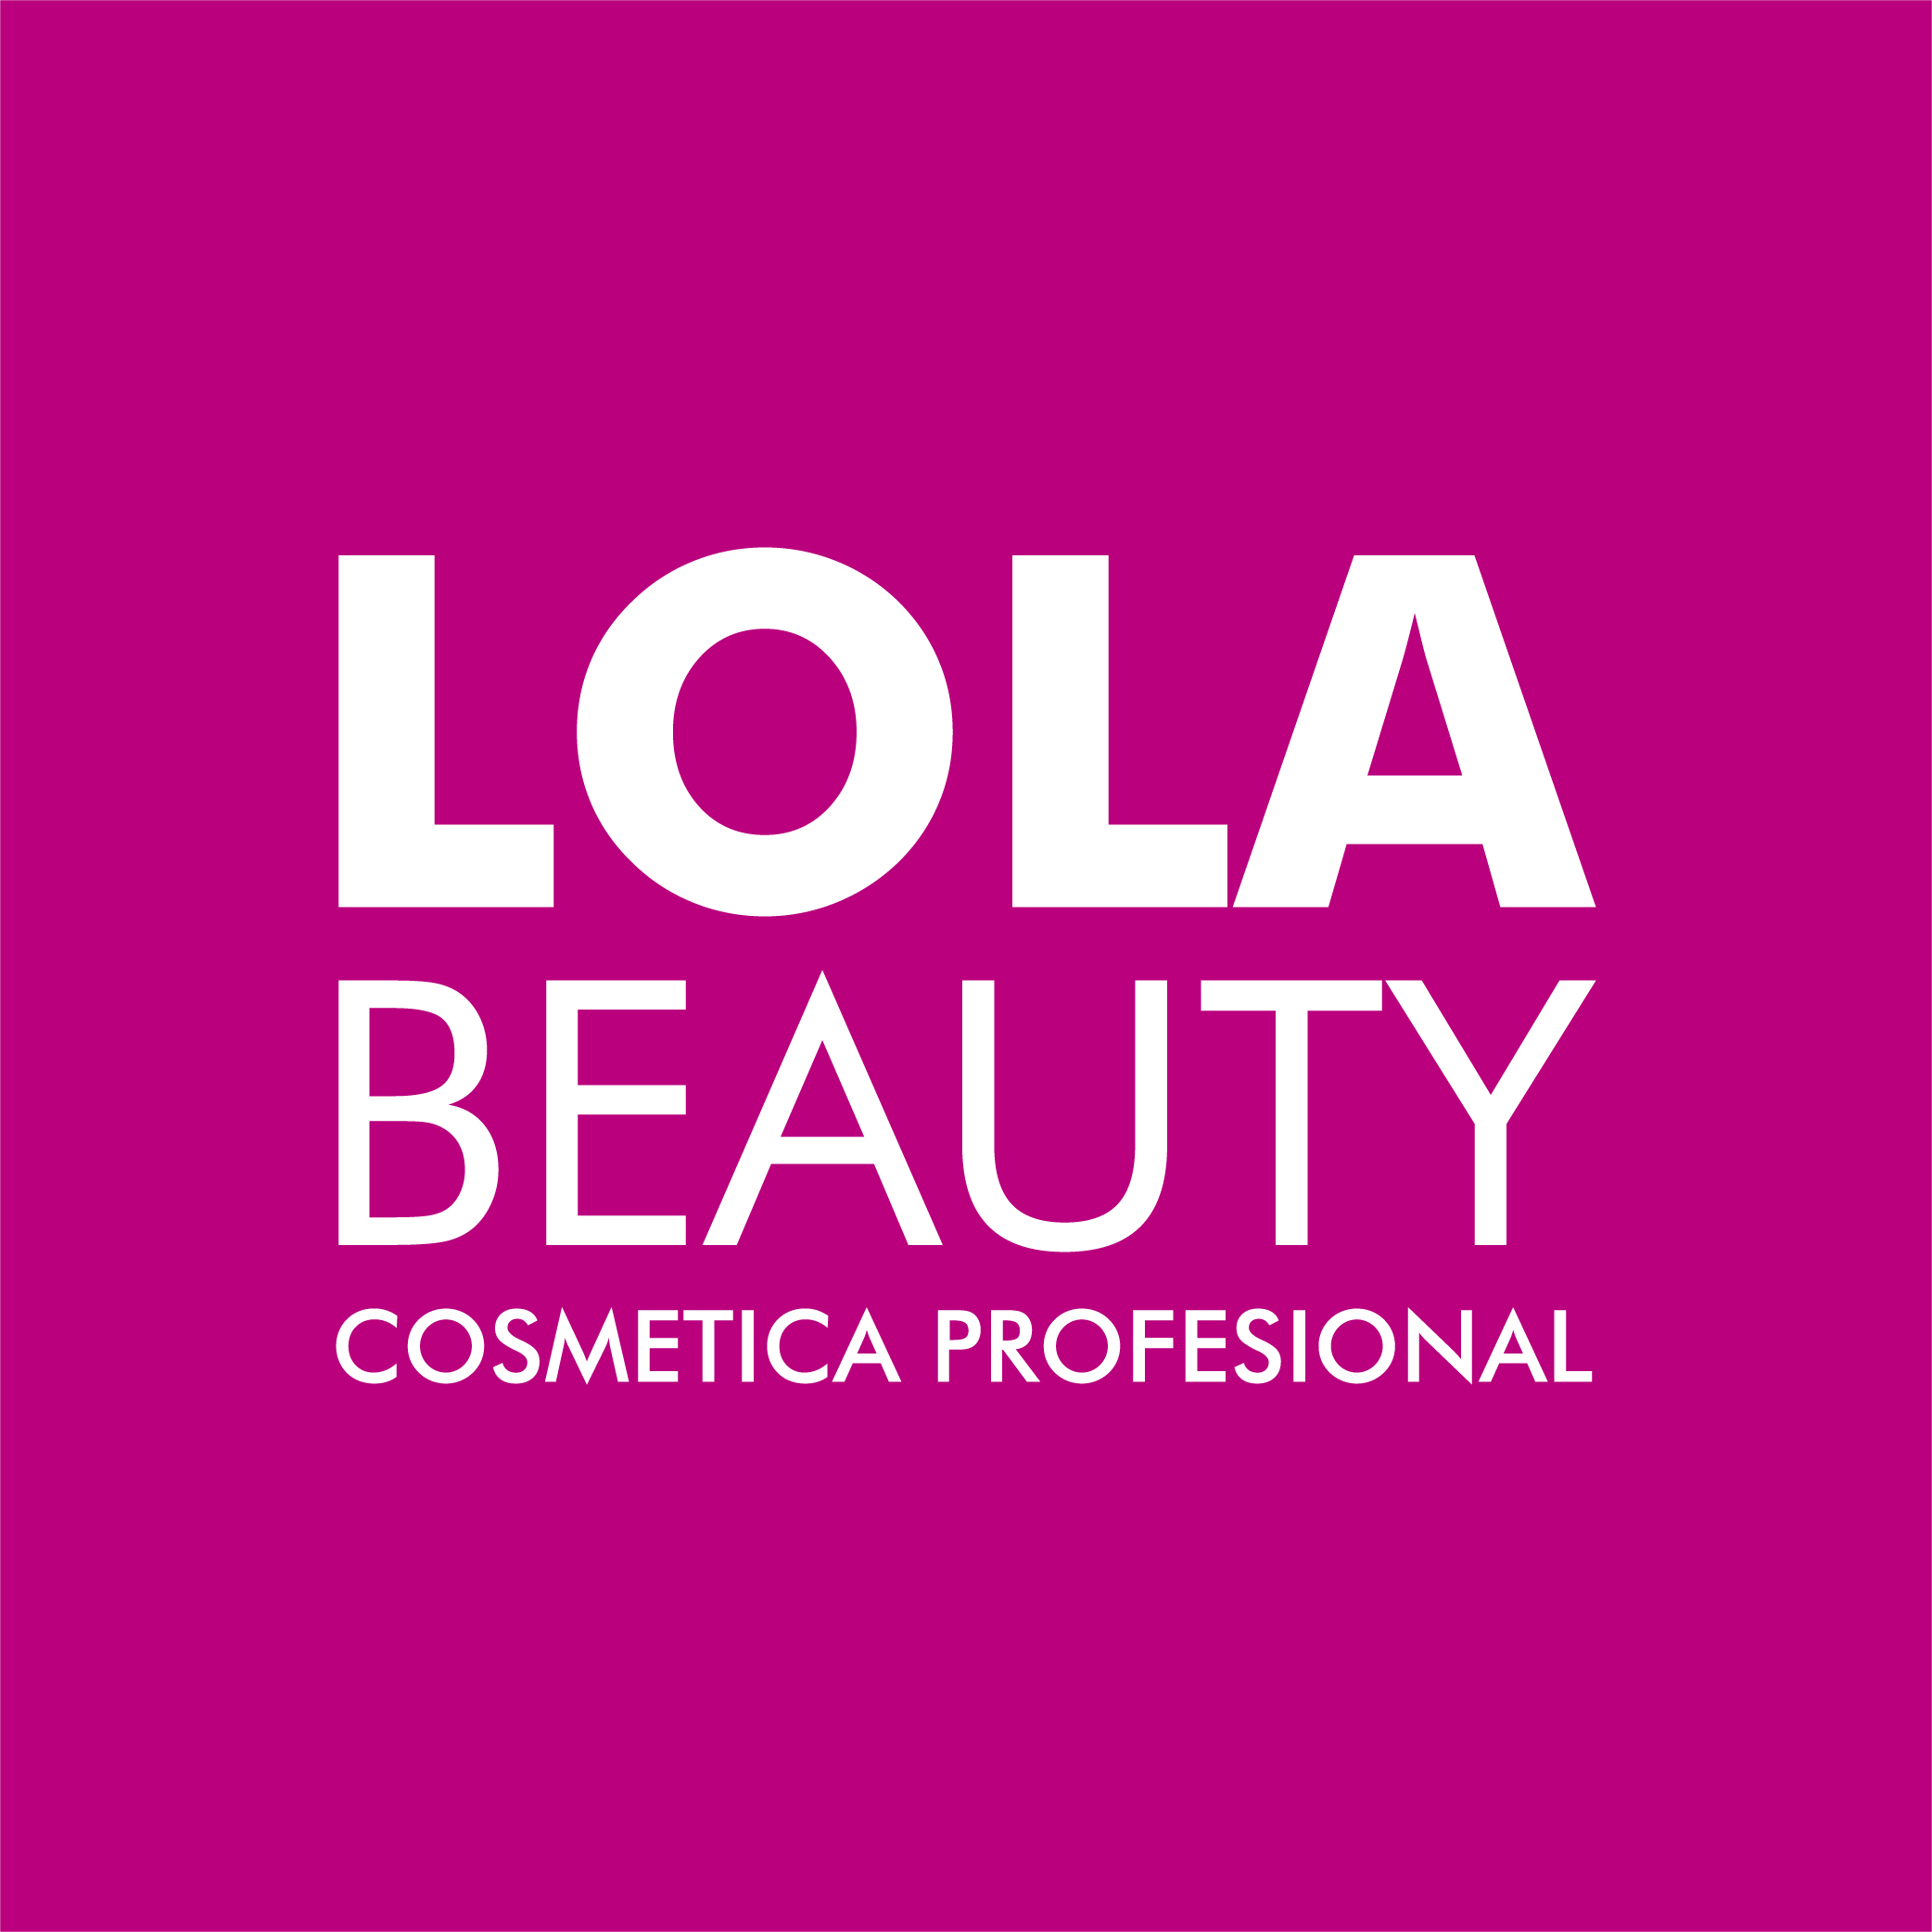 Lola Beauty Cosmética Profesional